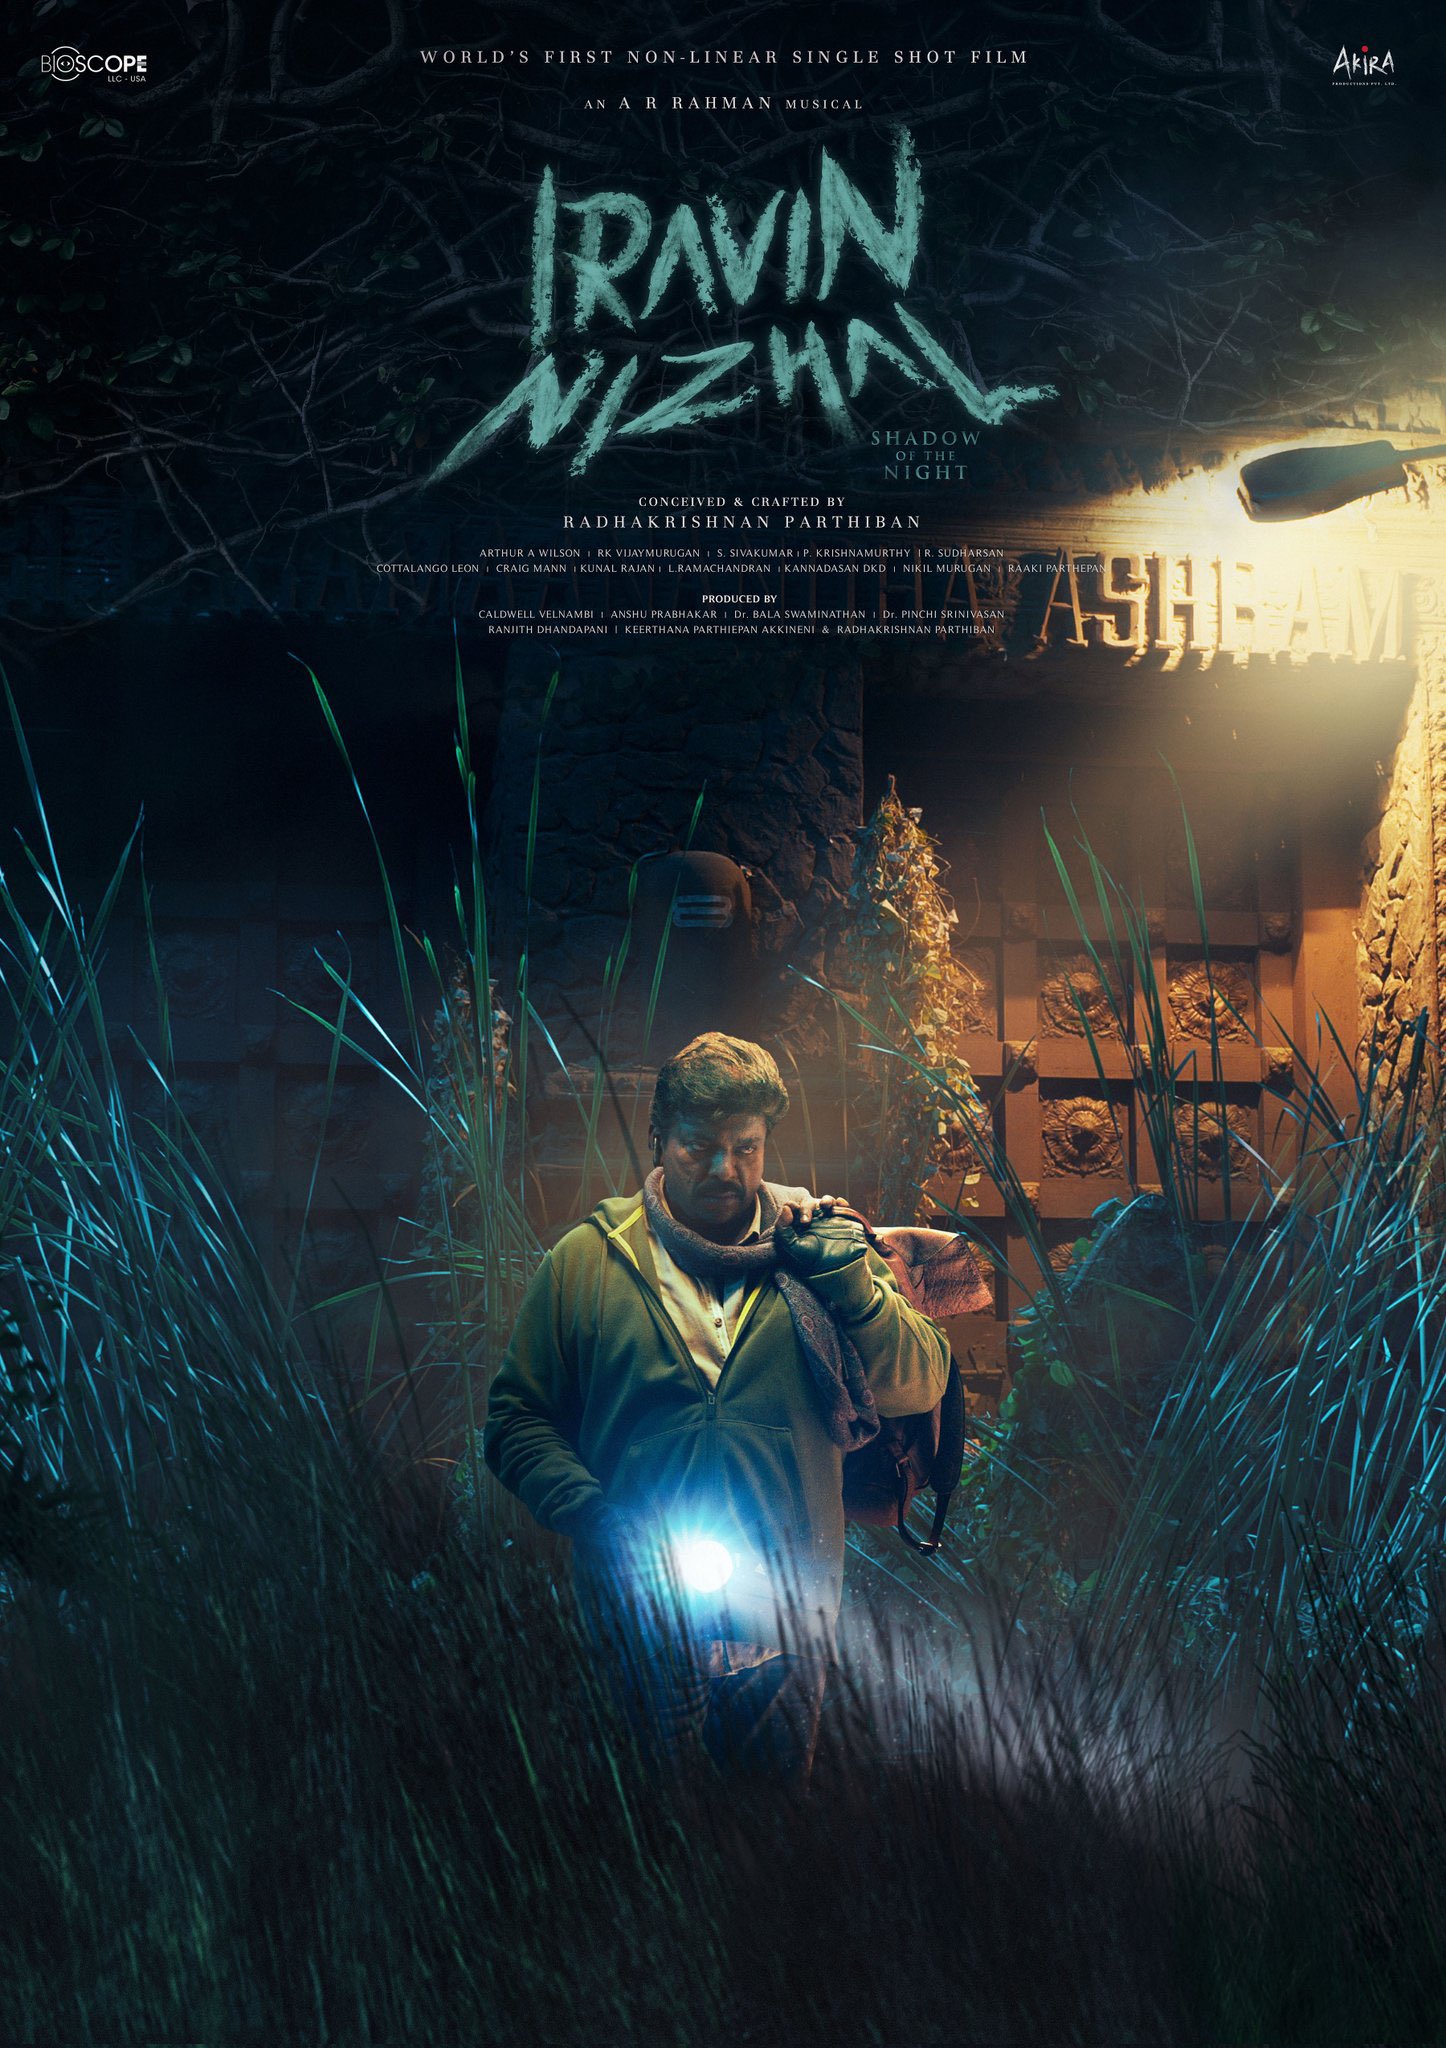 Iravin Nizhal Movie Review